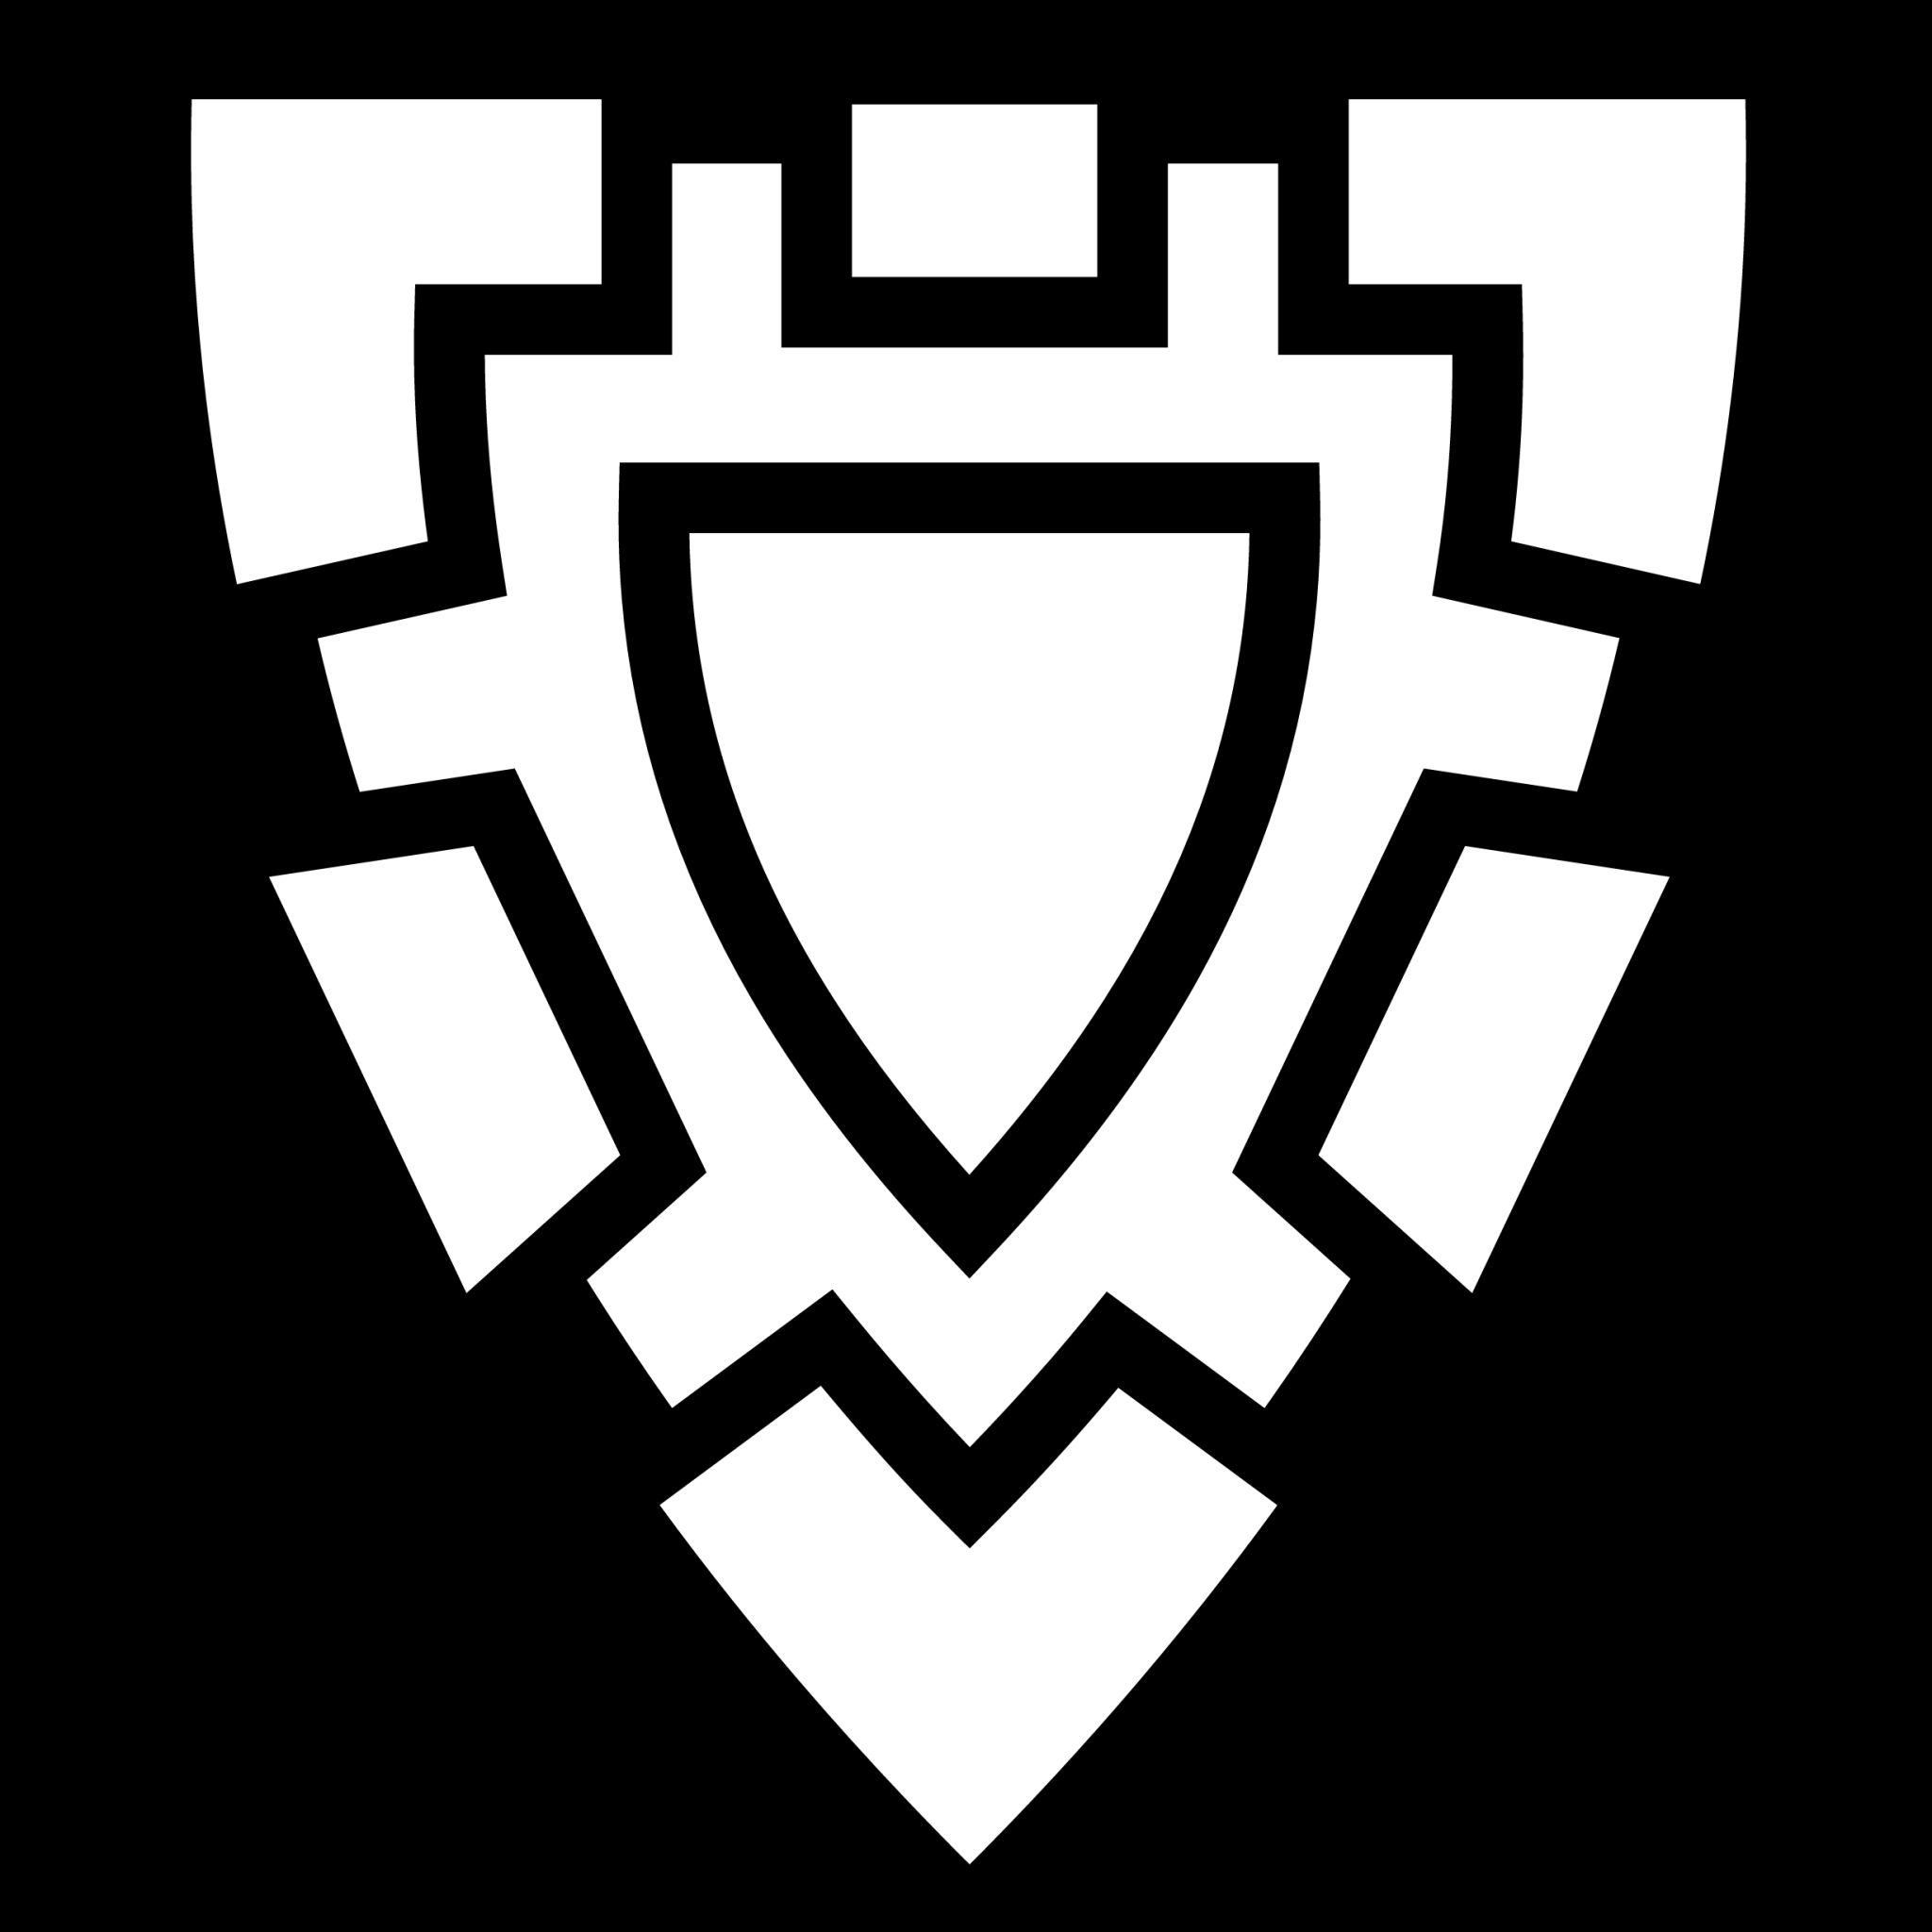 bordered shield icon